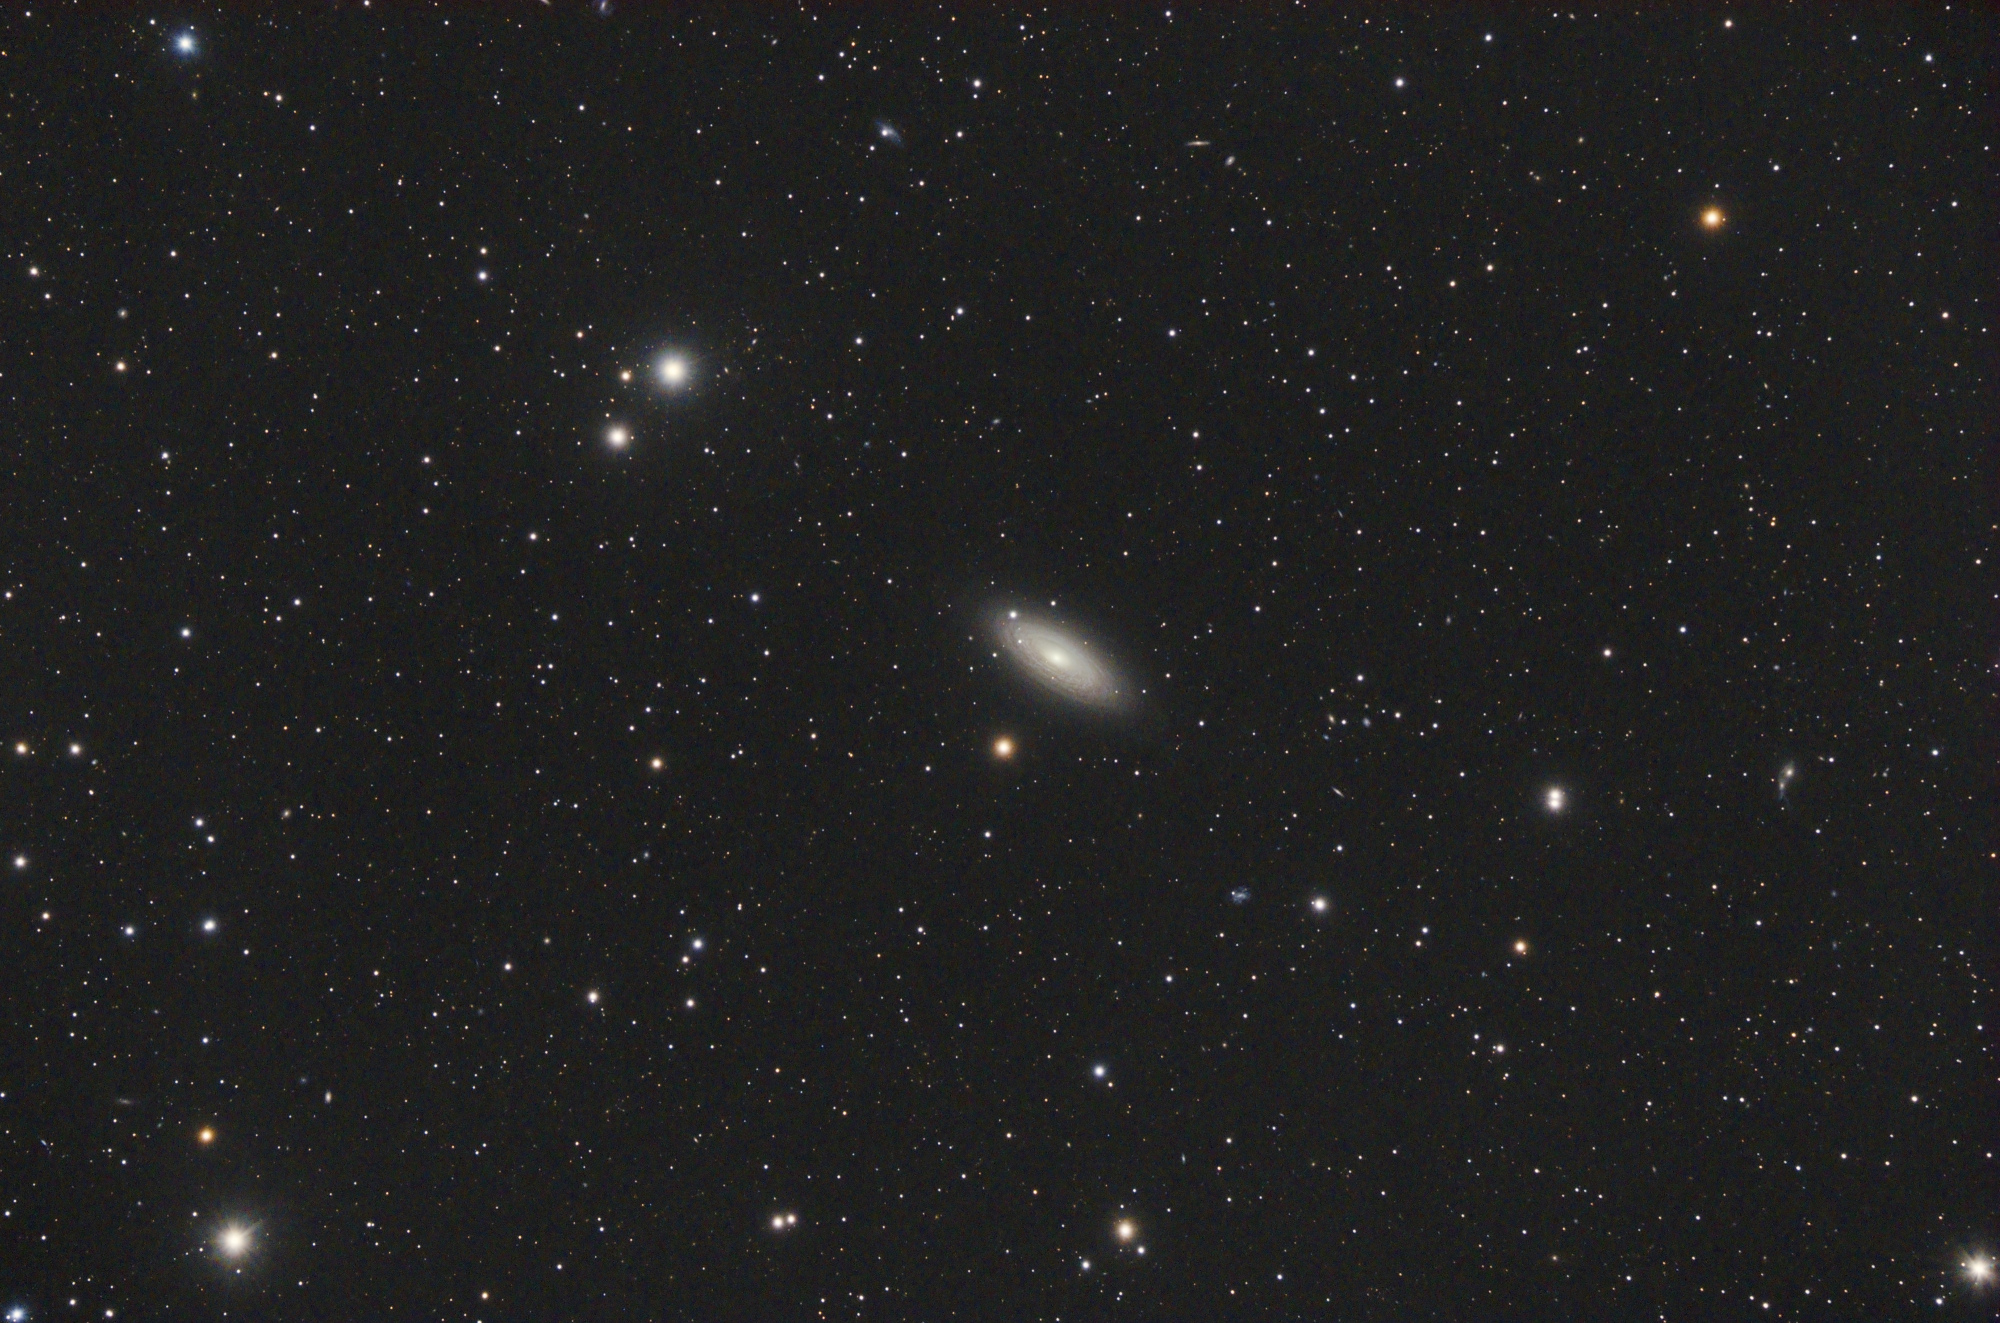 NGC_2841_SIRIL-1-iris-1-cs5-2-FINAL-5-x.jpg